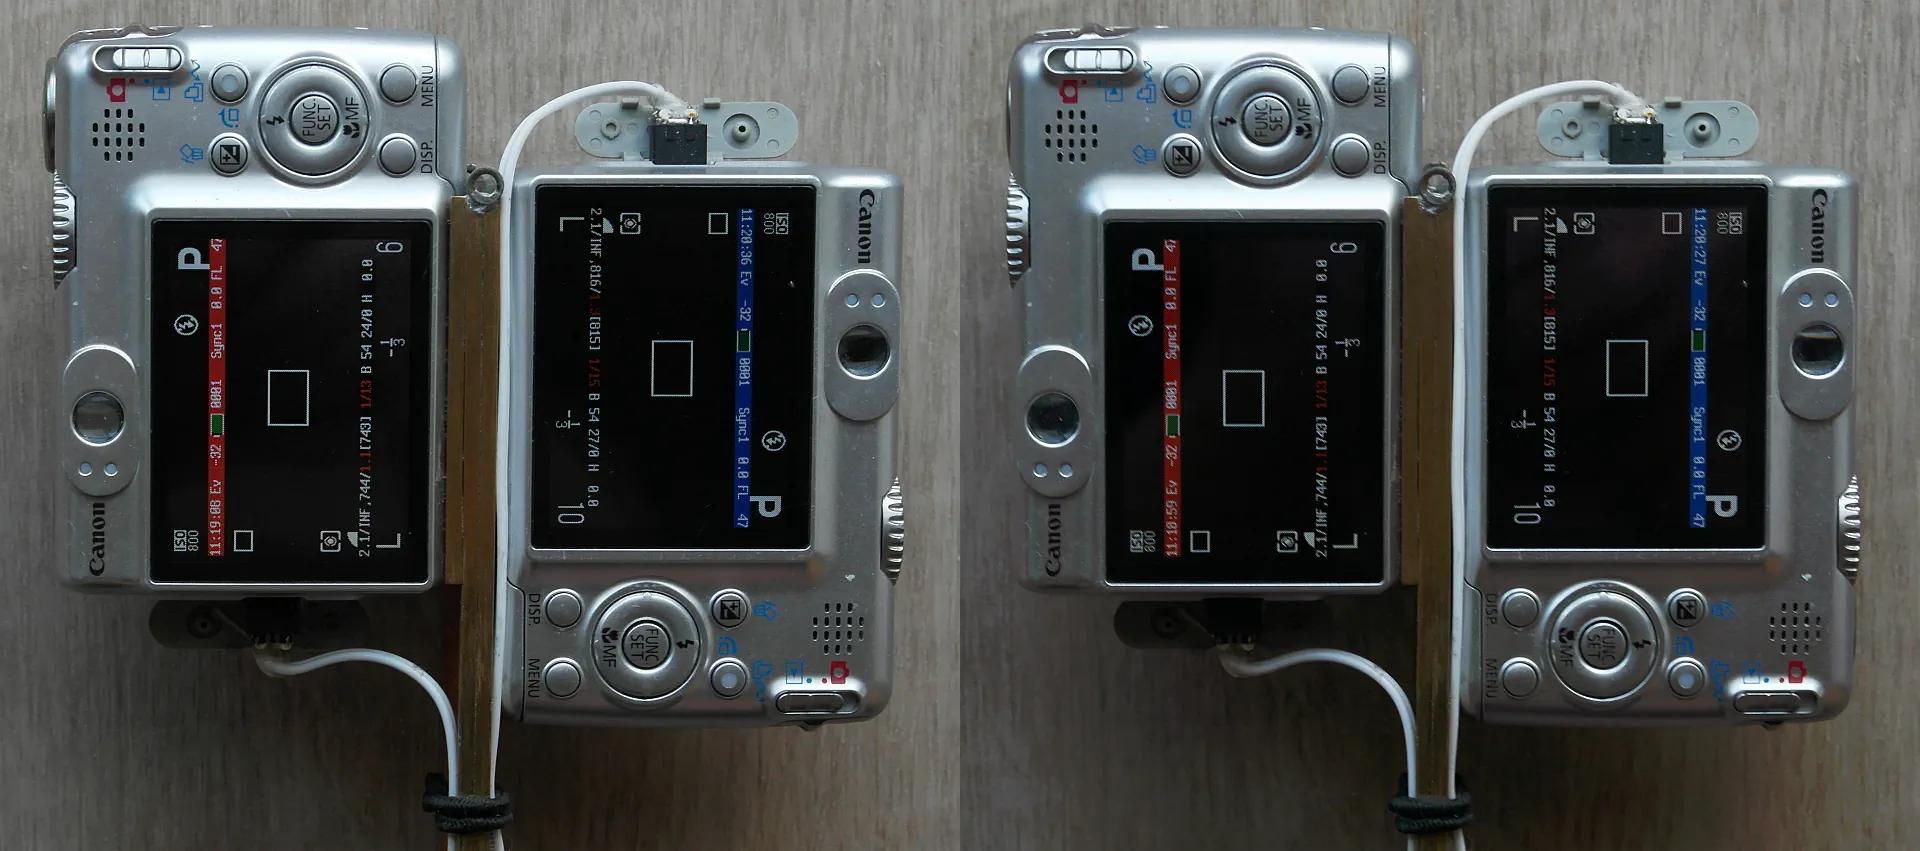 Canon A570 with SDM 3.0